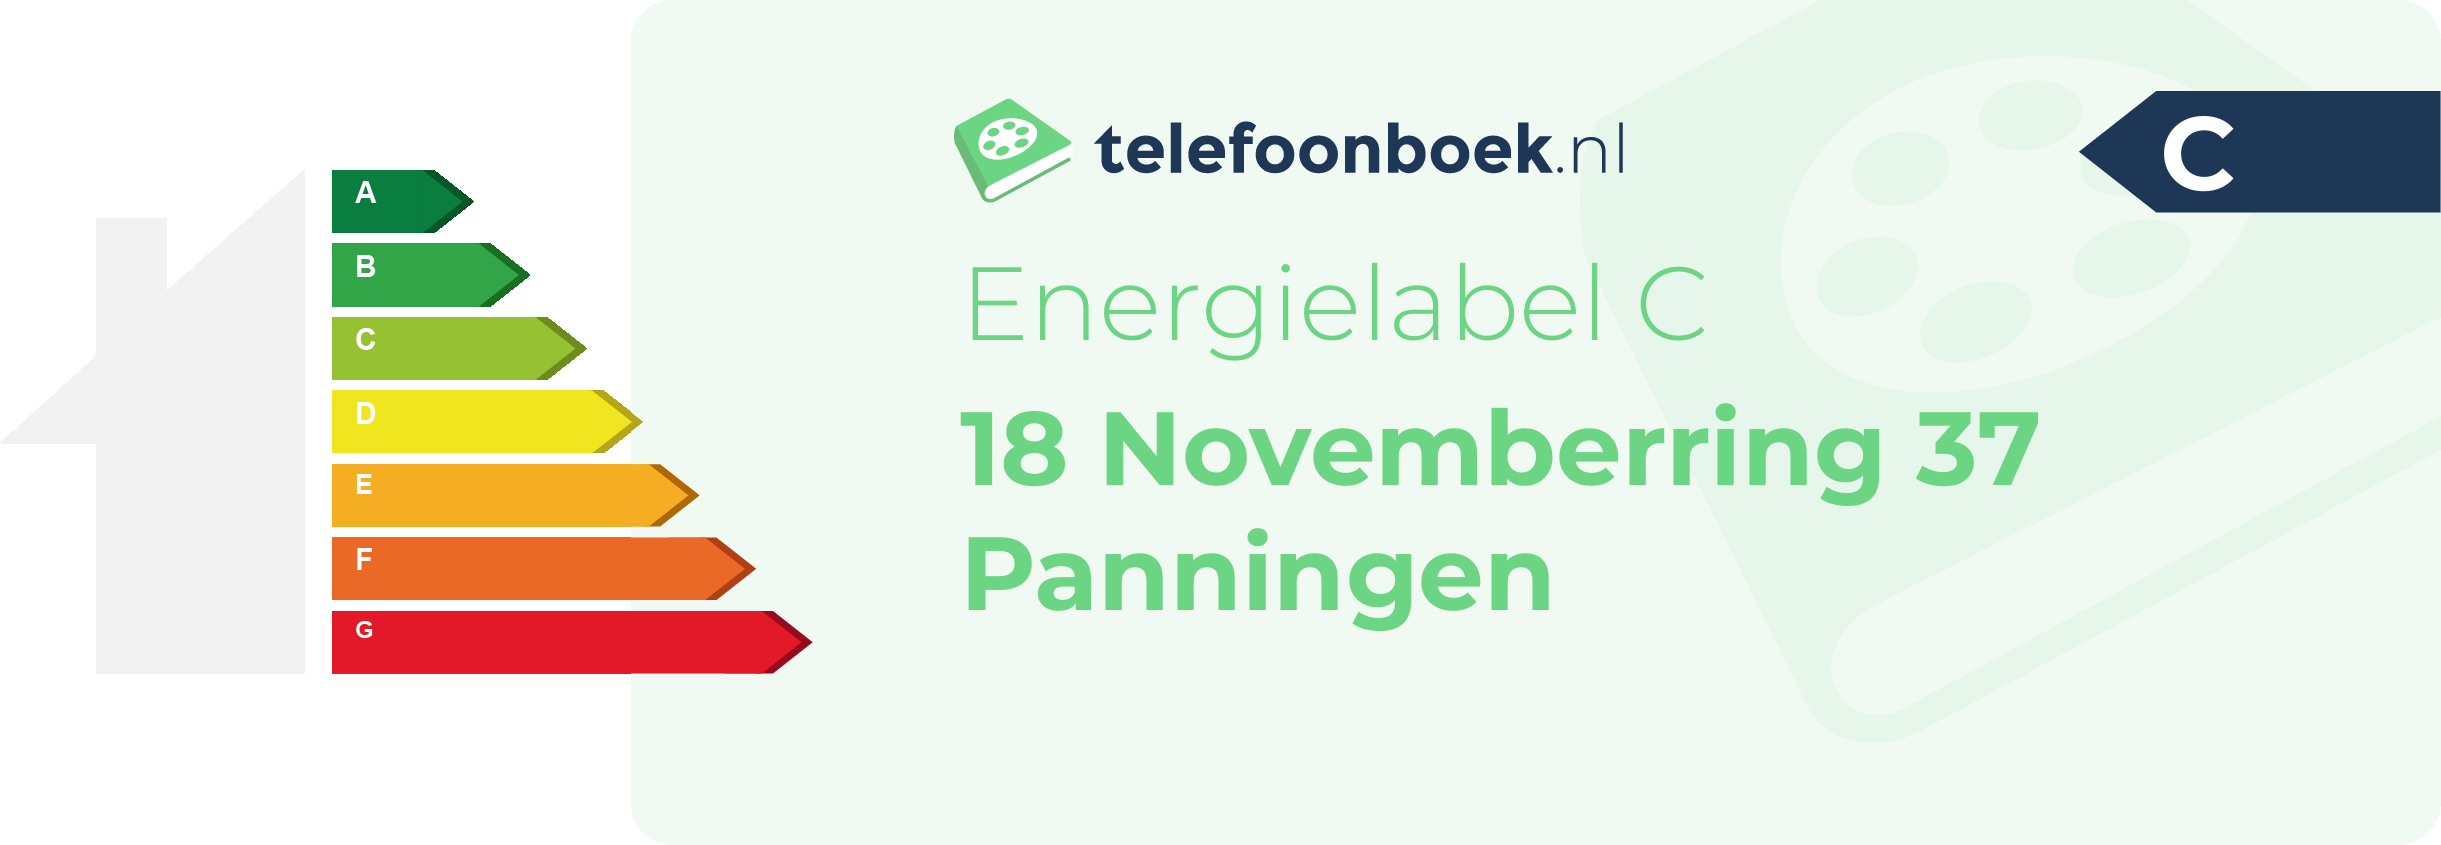 Energielabel 18 Novemberring 37 Panningen